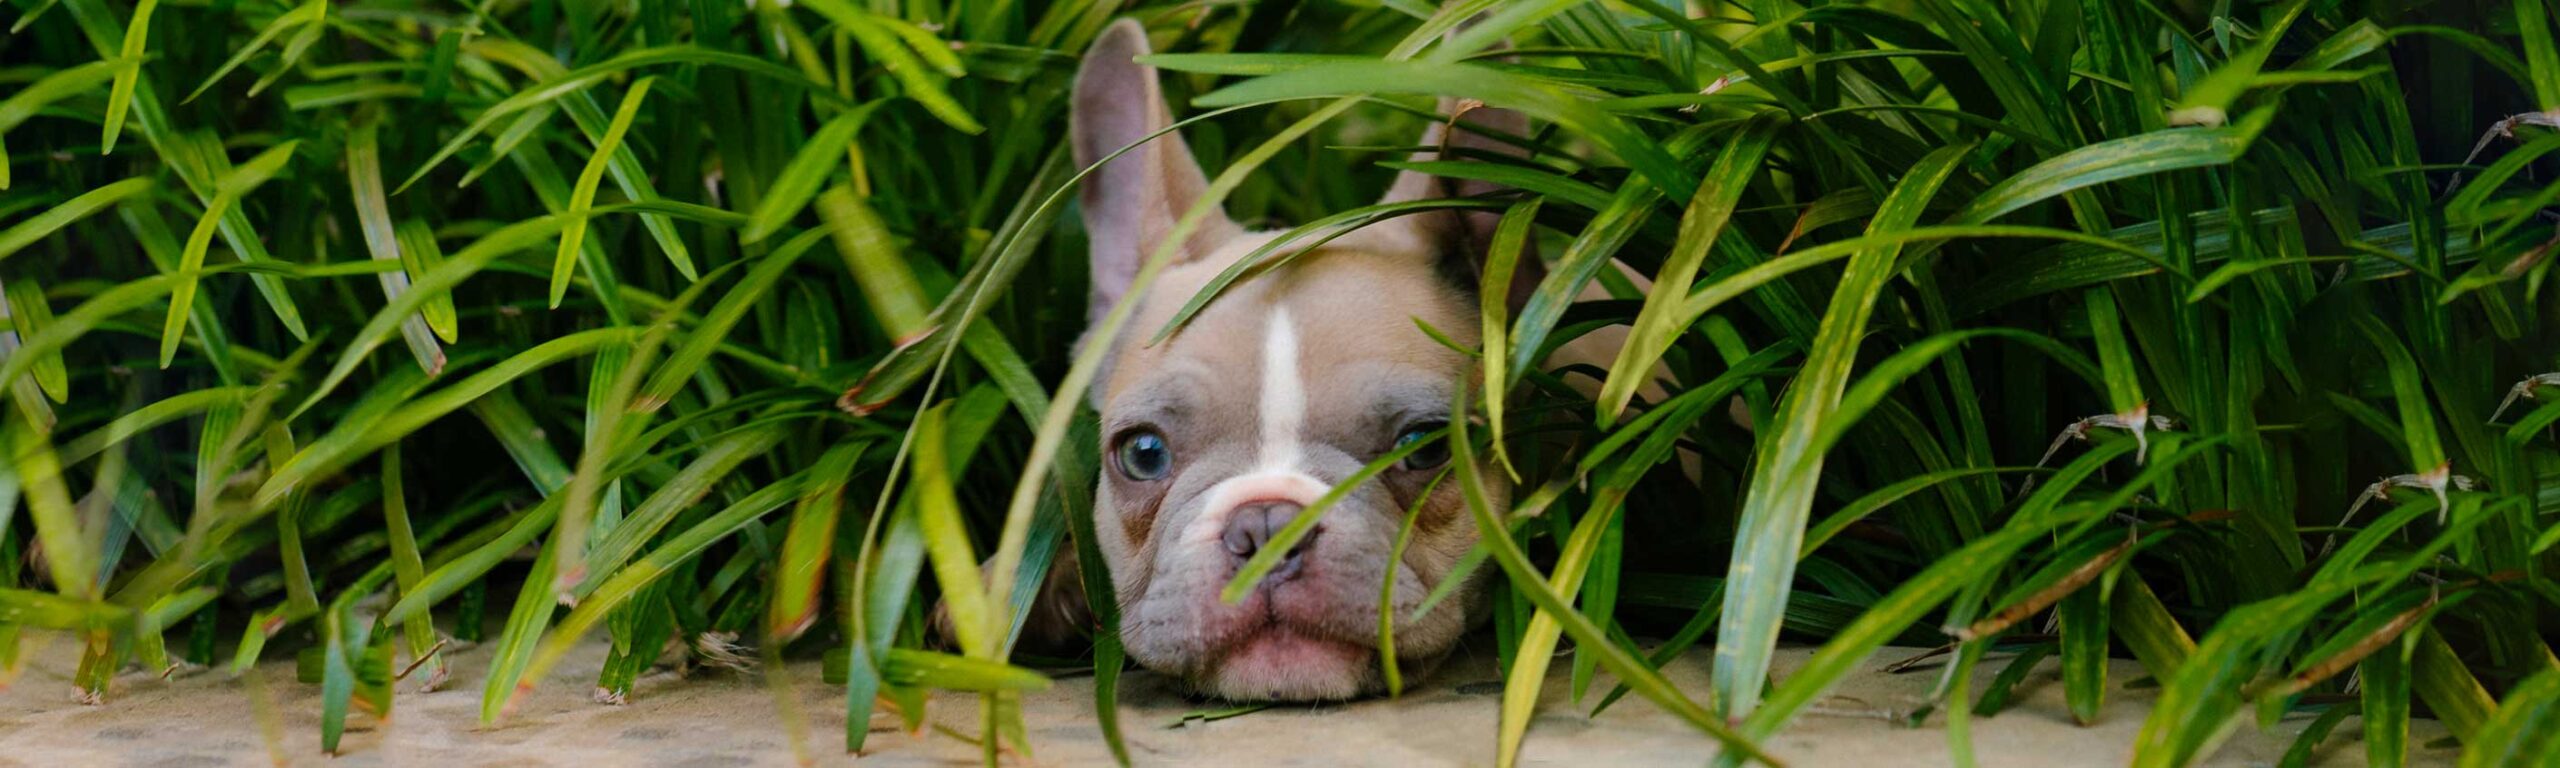 A french bulldog peeks out of mondo grass.